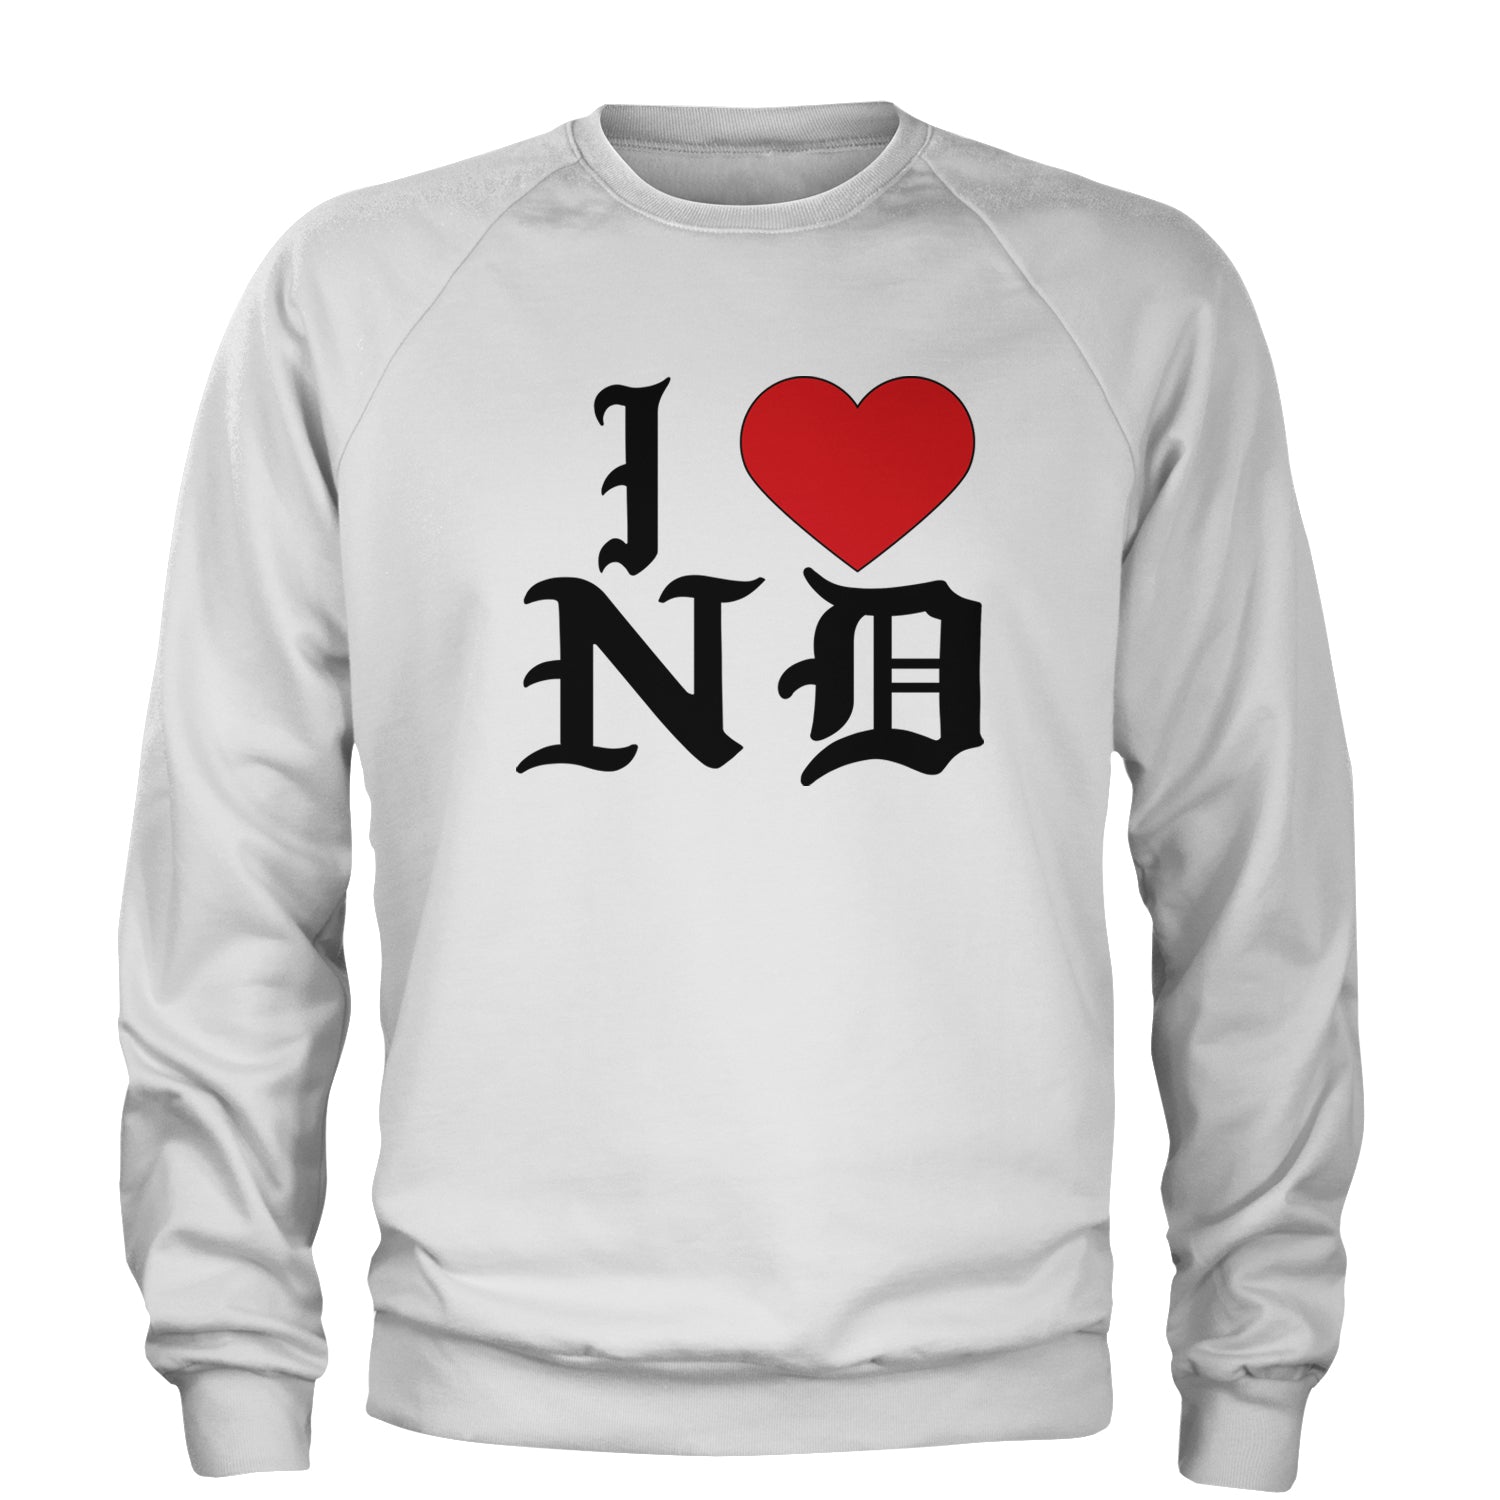 I Heart ND Punk Ska Guts Adult Crewneck Sweatshirt